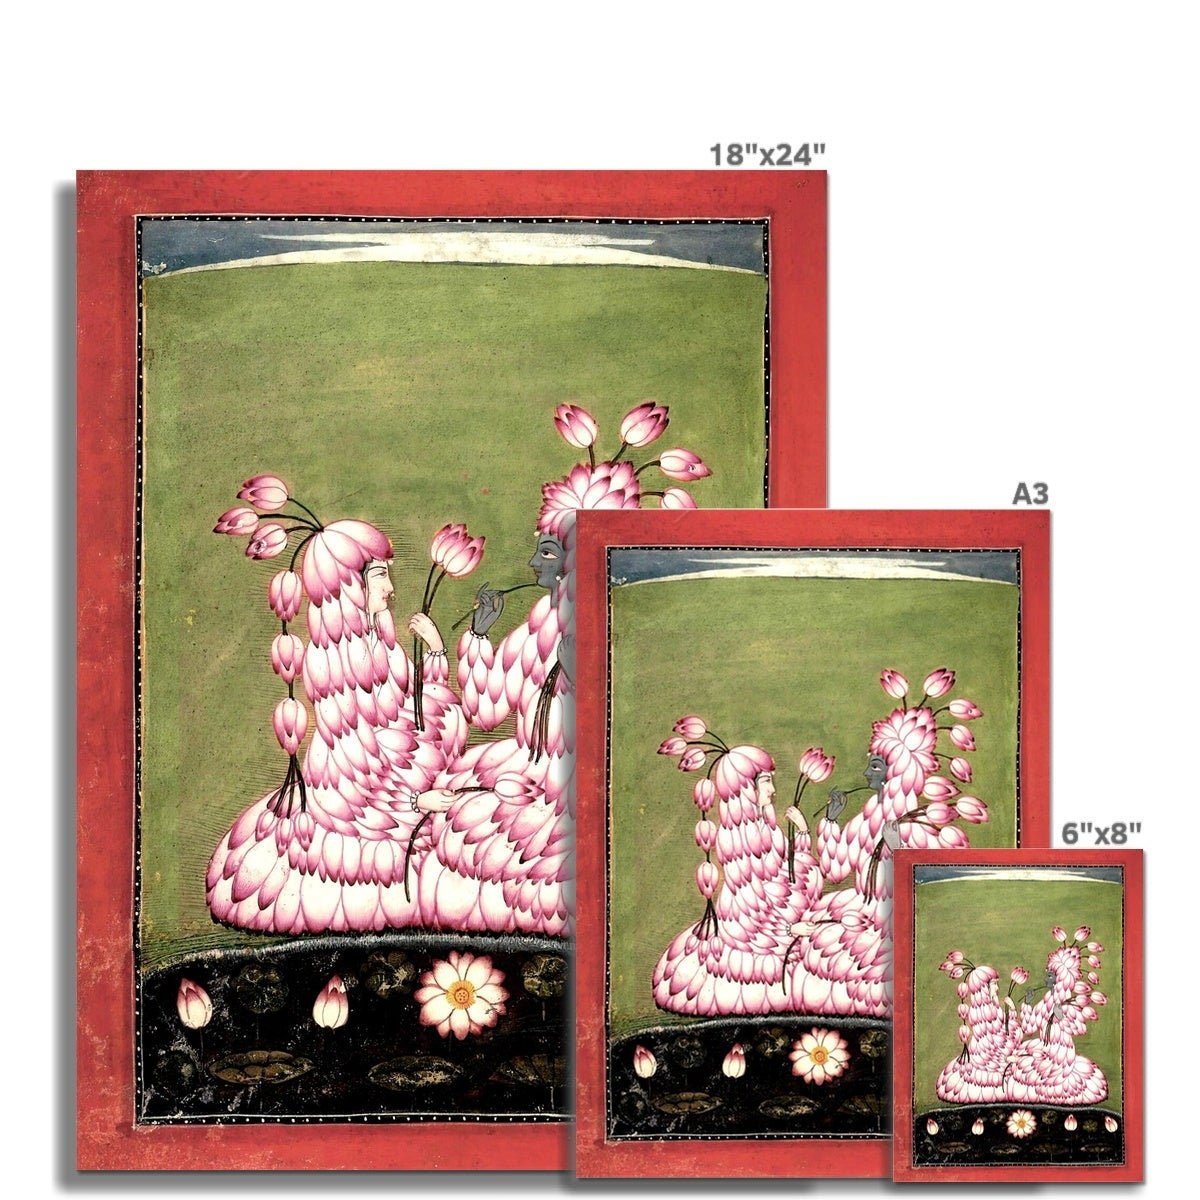 Lotus Clad Radha and Krishna | Hindu Devotional Bhakti Art | Yoga Art | Rishi Siddhi Hindu Mythology | Meditation Divine Love Fine Art Print